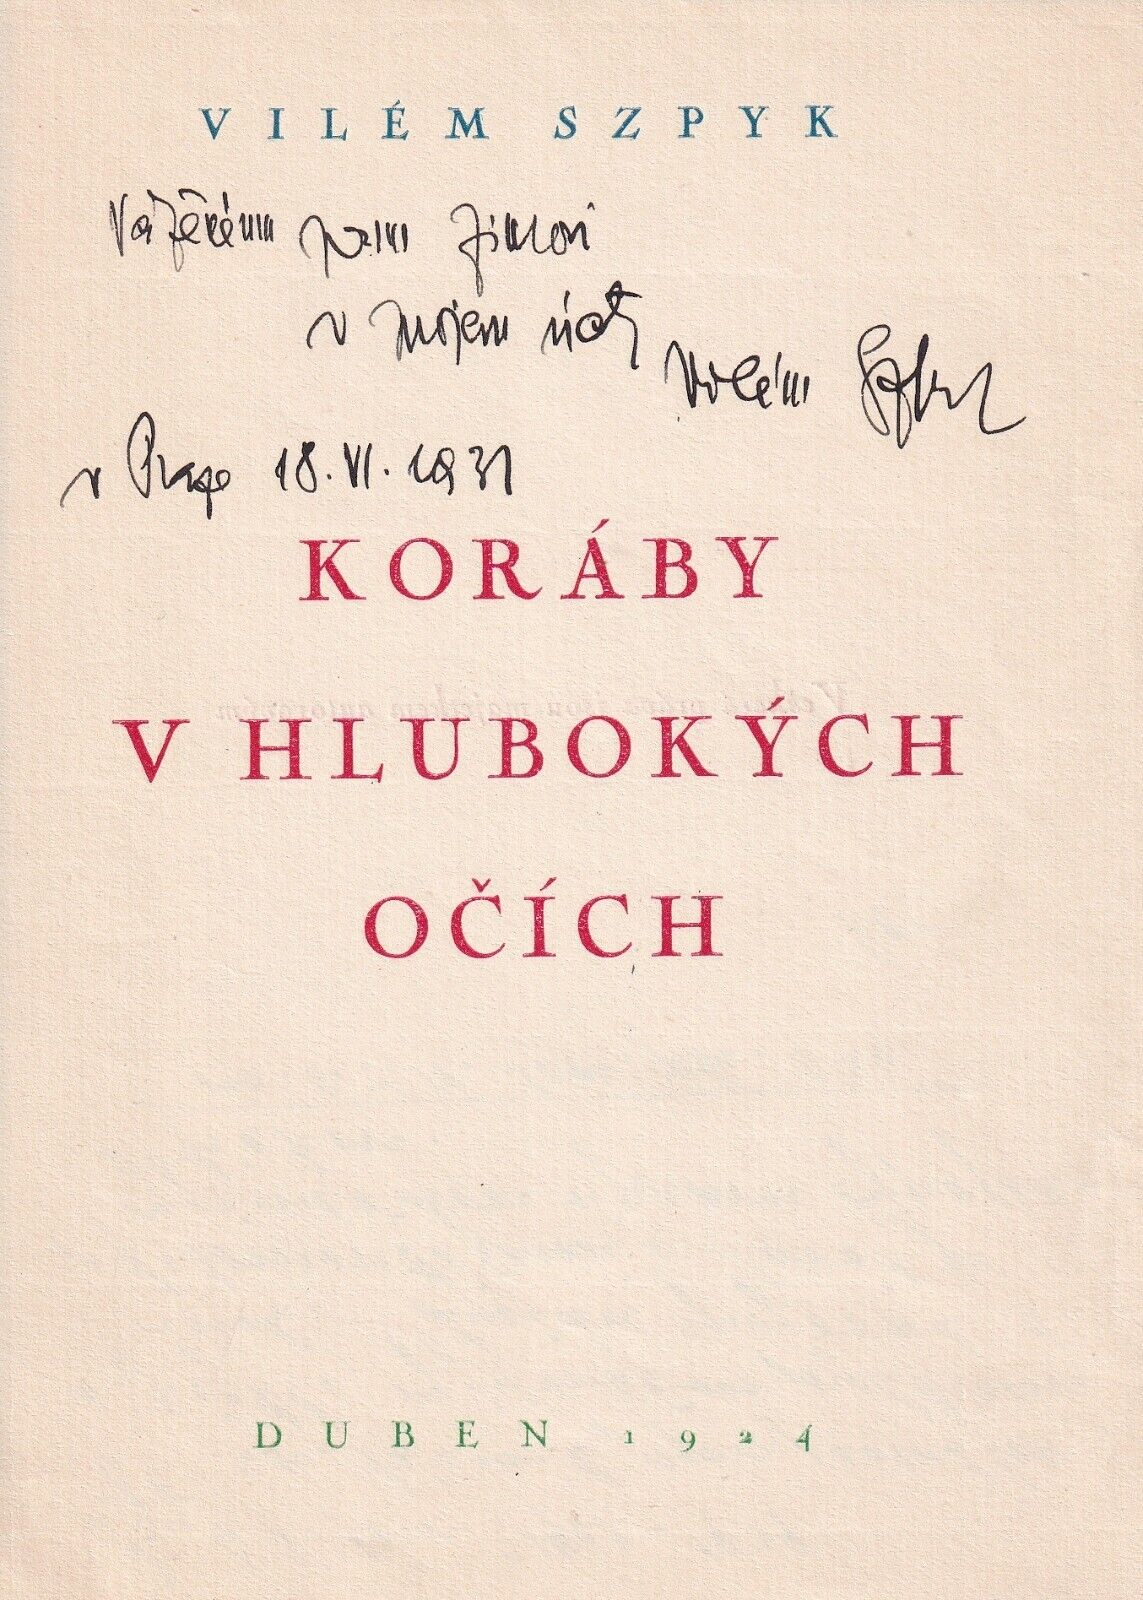 VILEM SZPYK Tragic Czech Poet & creator Poetic Photosynthesis signed title page